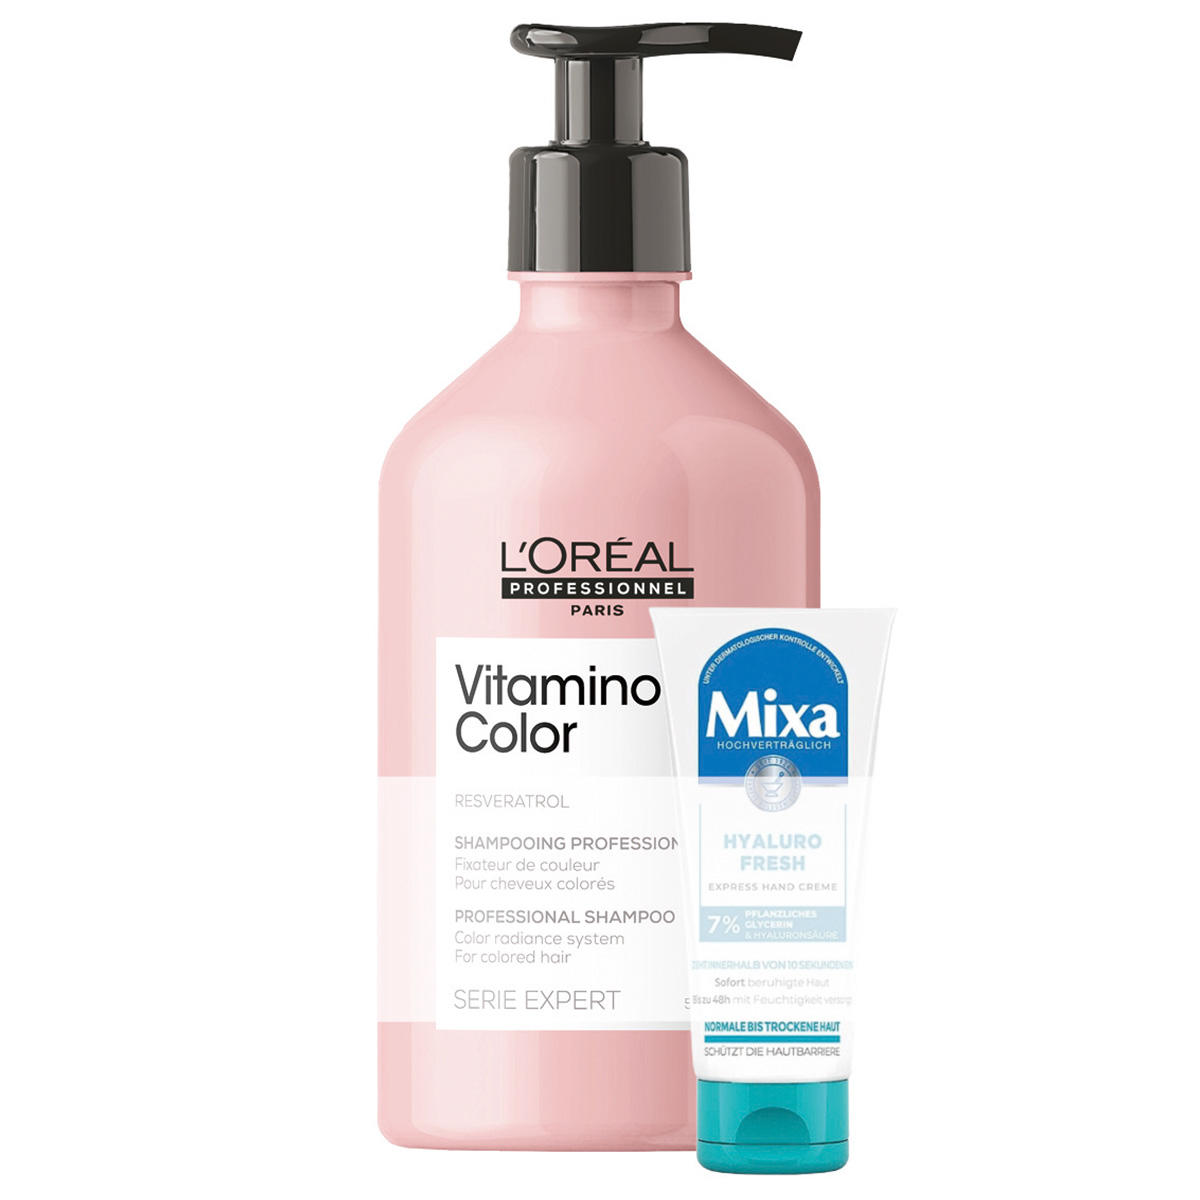 L'Oréal Professionnel Paris Serie Expert Vitamino Color Professional Shampoo 500 ml + gift - 1